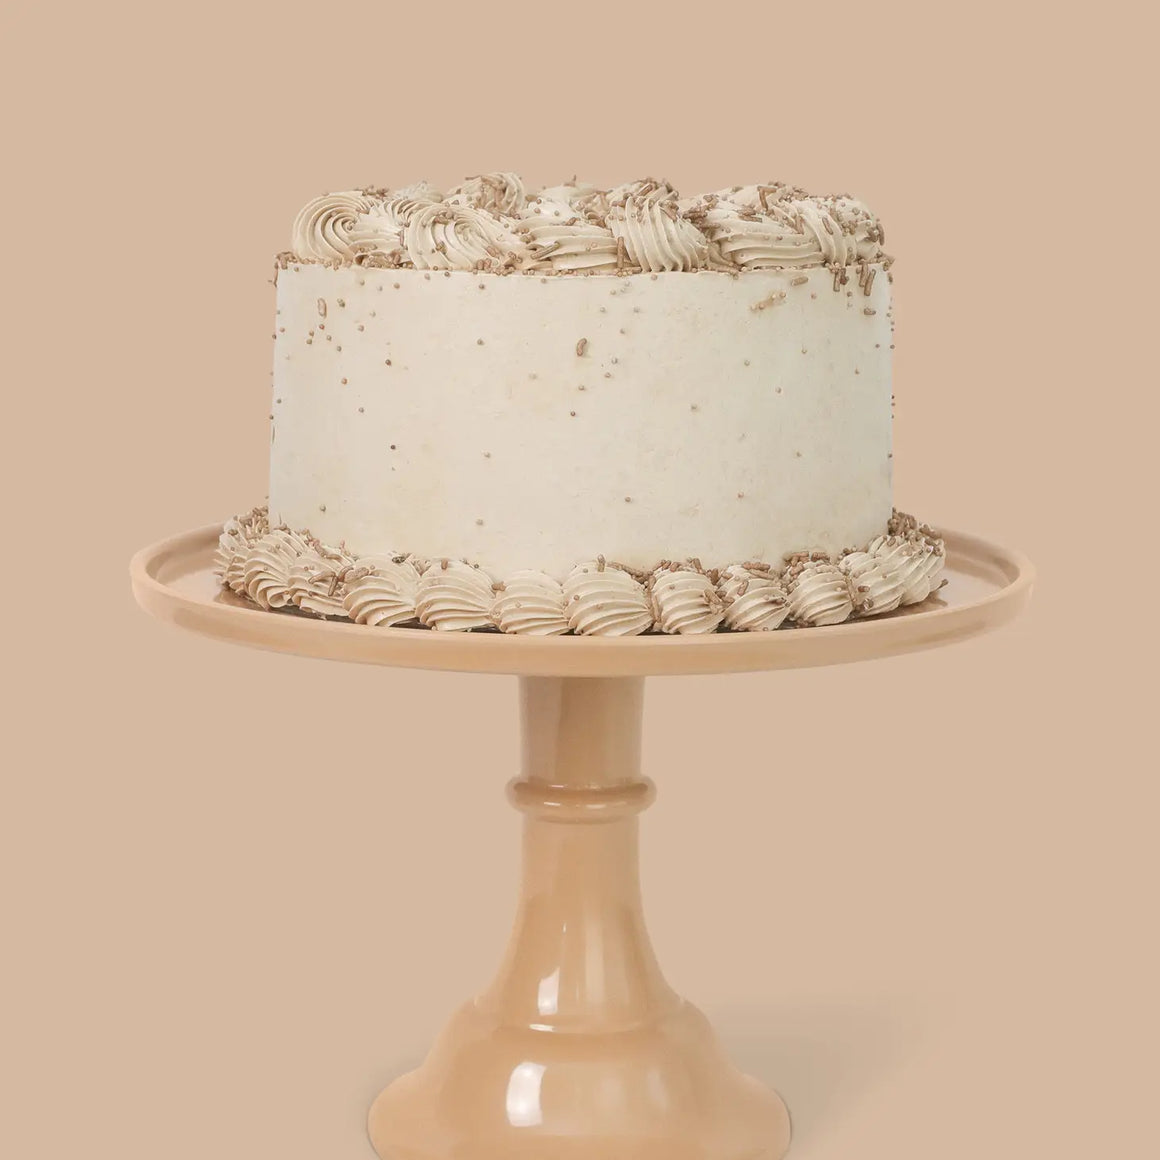 Melamine cake stand - Latte brown